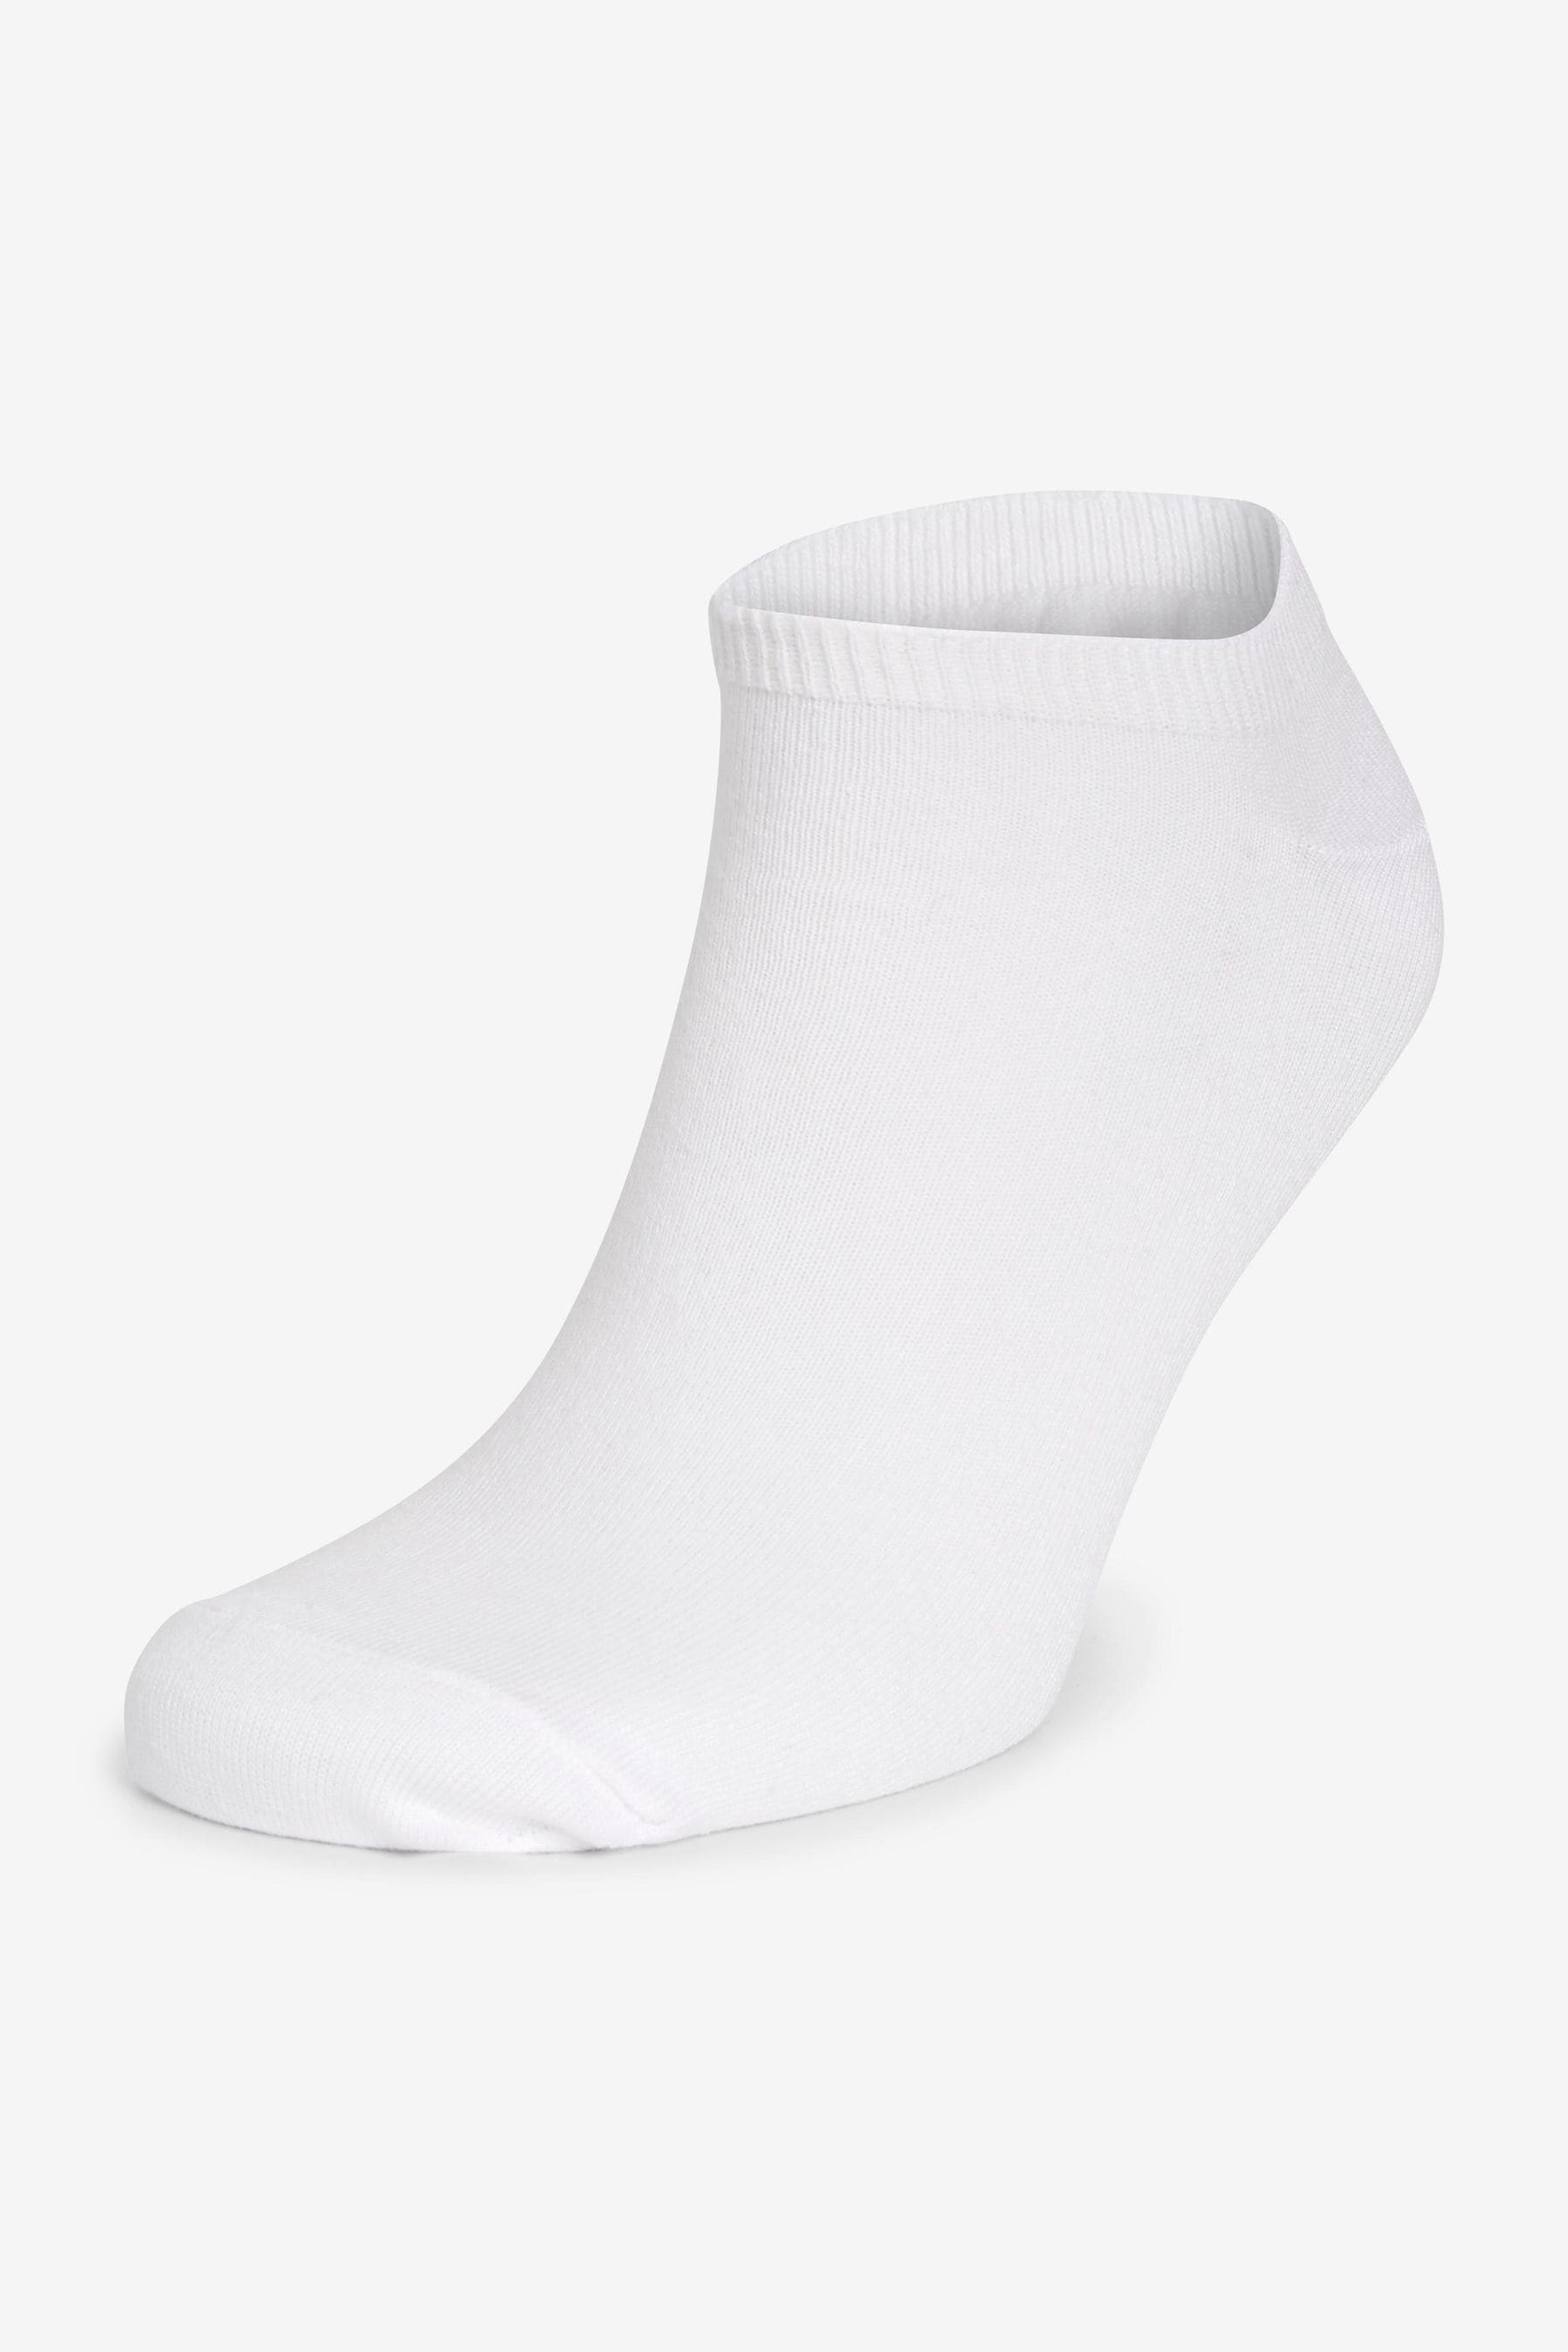 Buy Multi 6 Pack Trainer Socks from the Next UK online shop